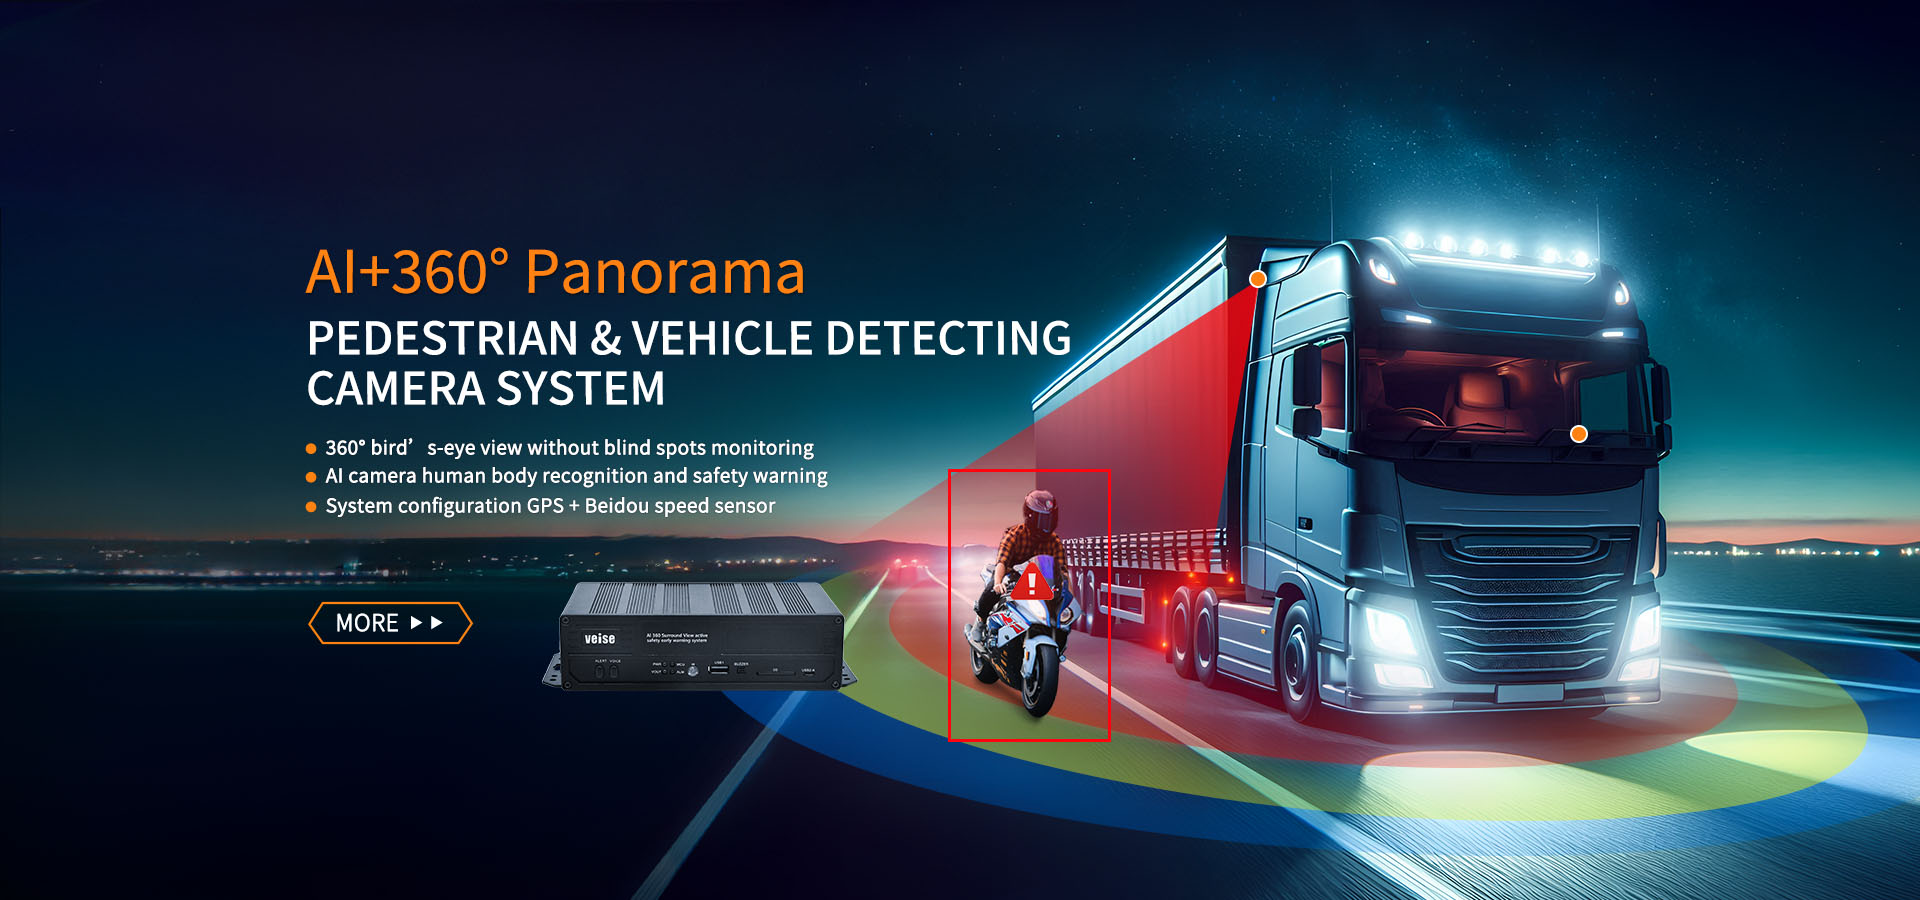 al+360 panorama pedestrian & vehicle detecting camera system